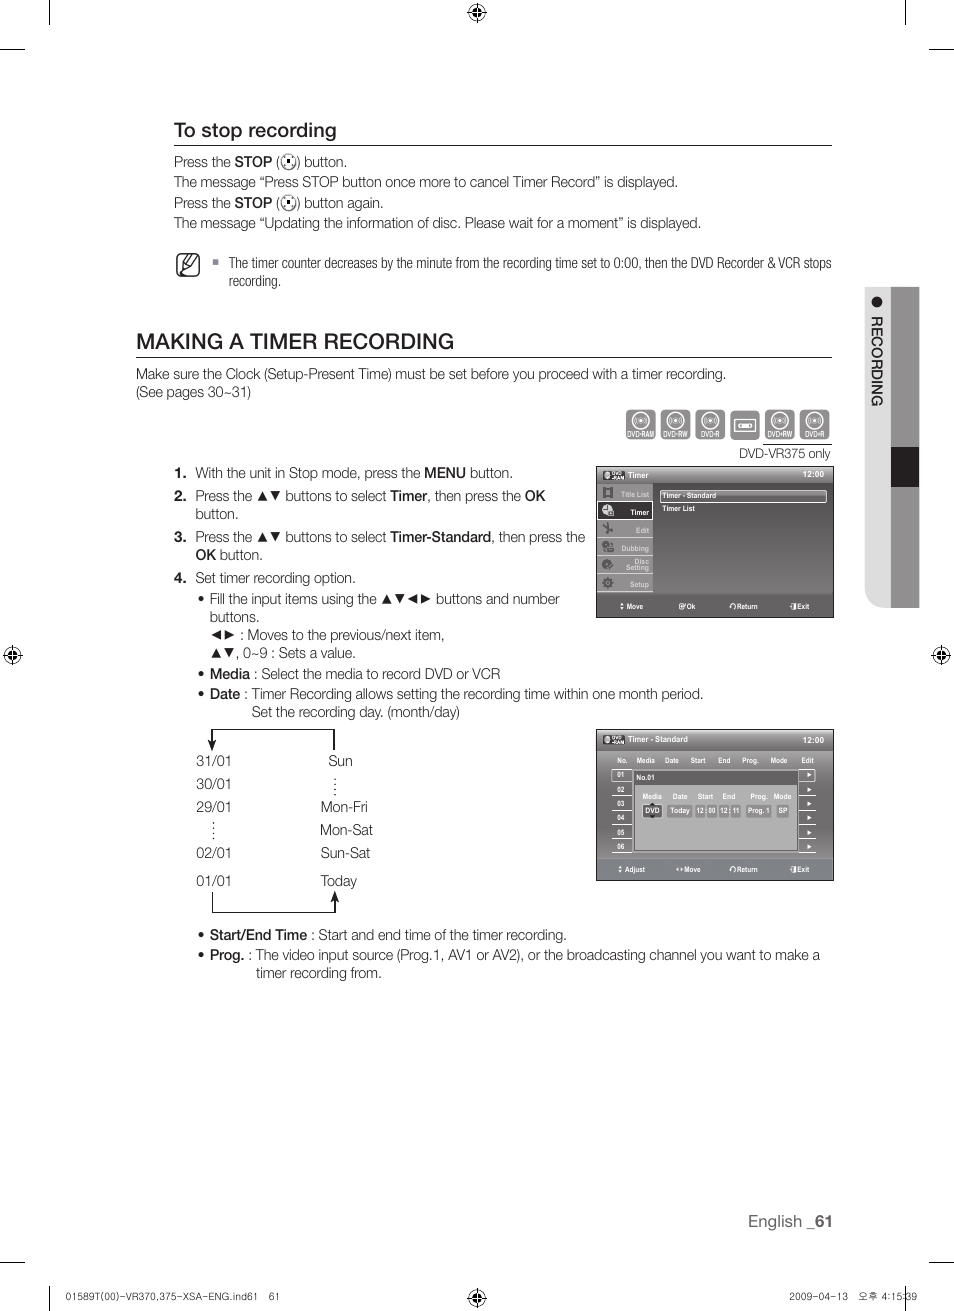 Making a timer recording, Xcv kl, English | Samsung DVD-VR375 User